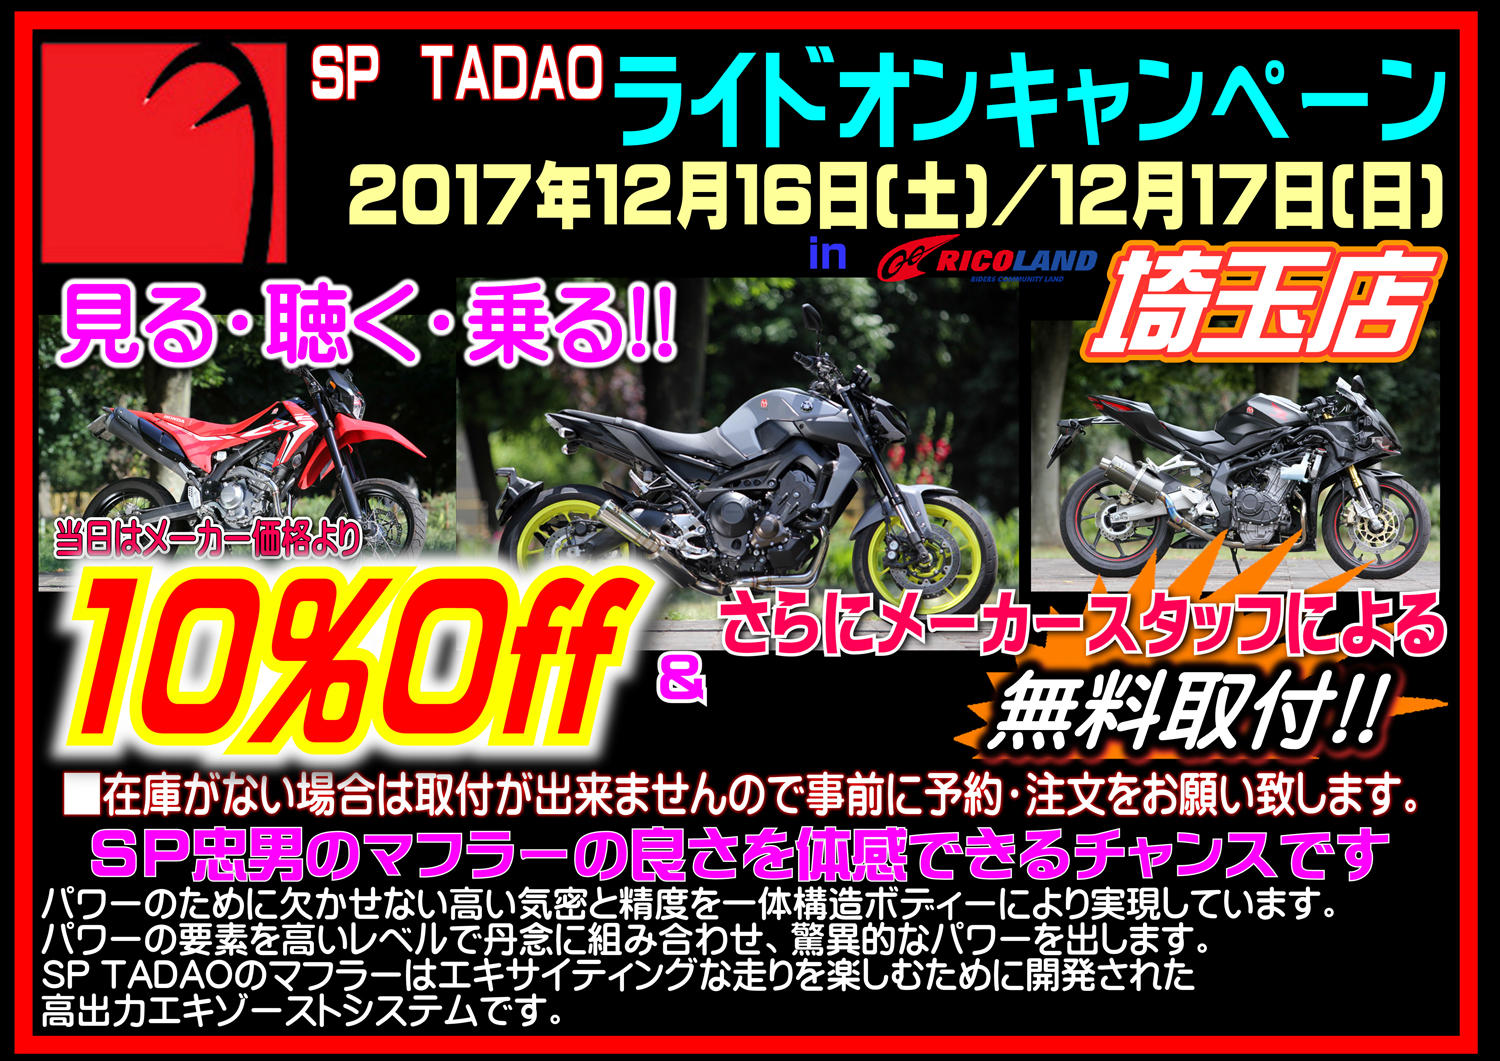 http://www.ricoland.co.jp/shopinfo/saitama/information/SPtadao2017121617.jpg